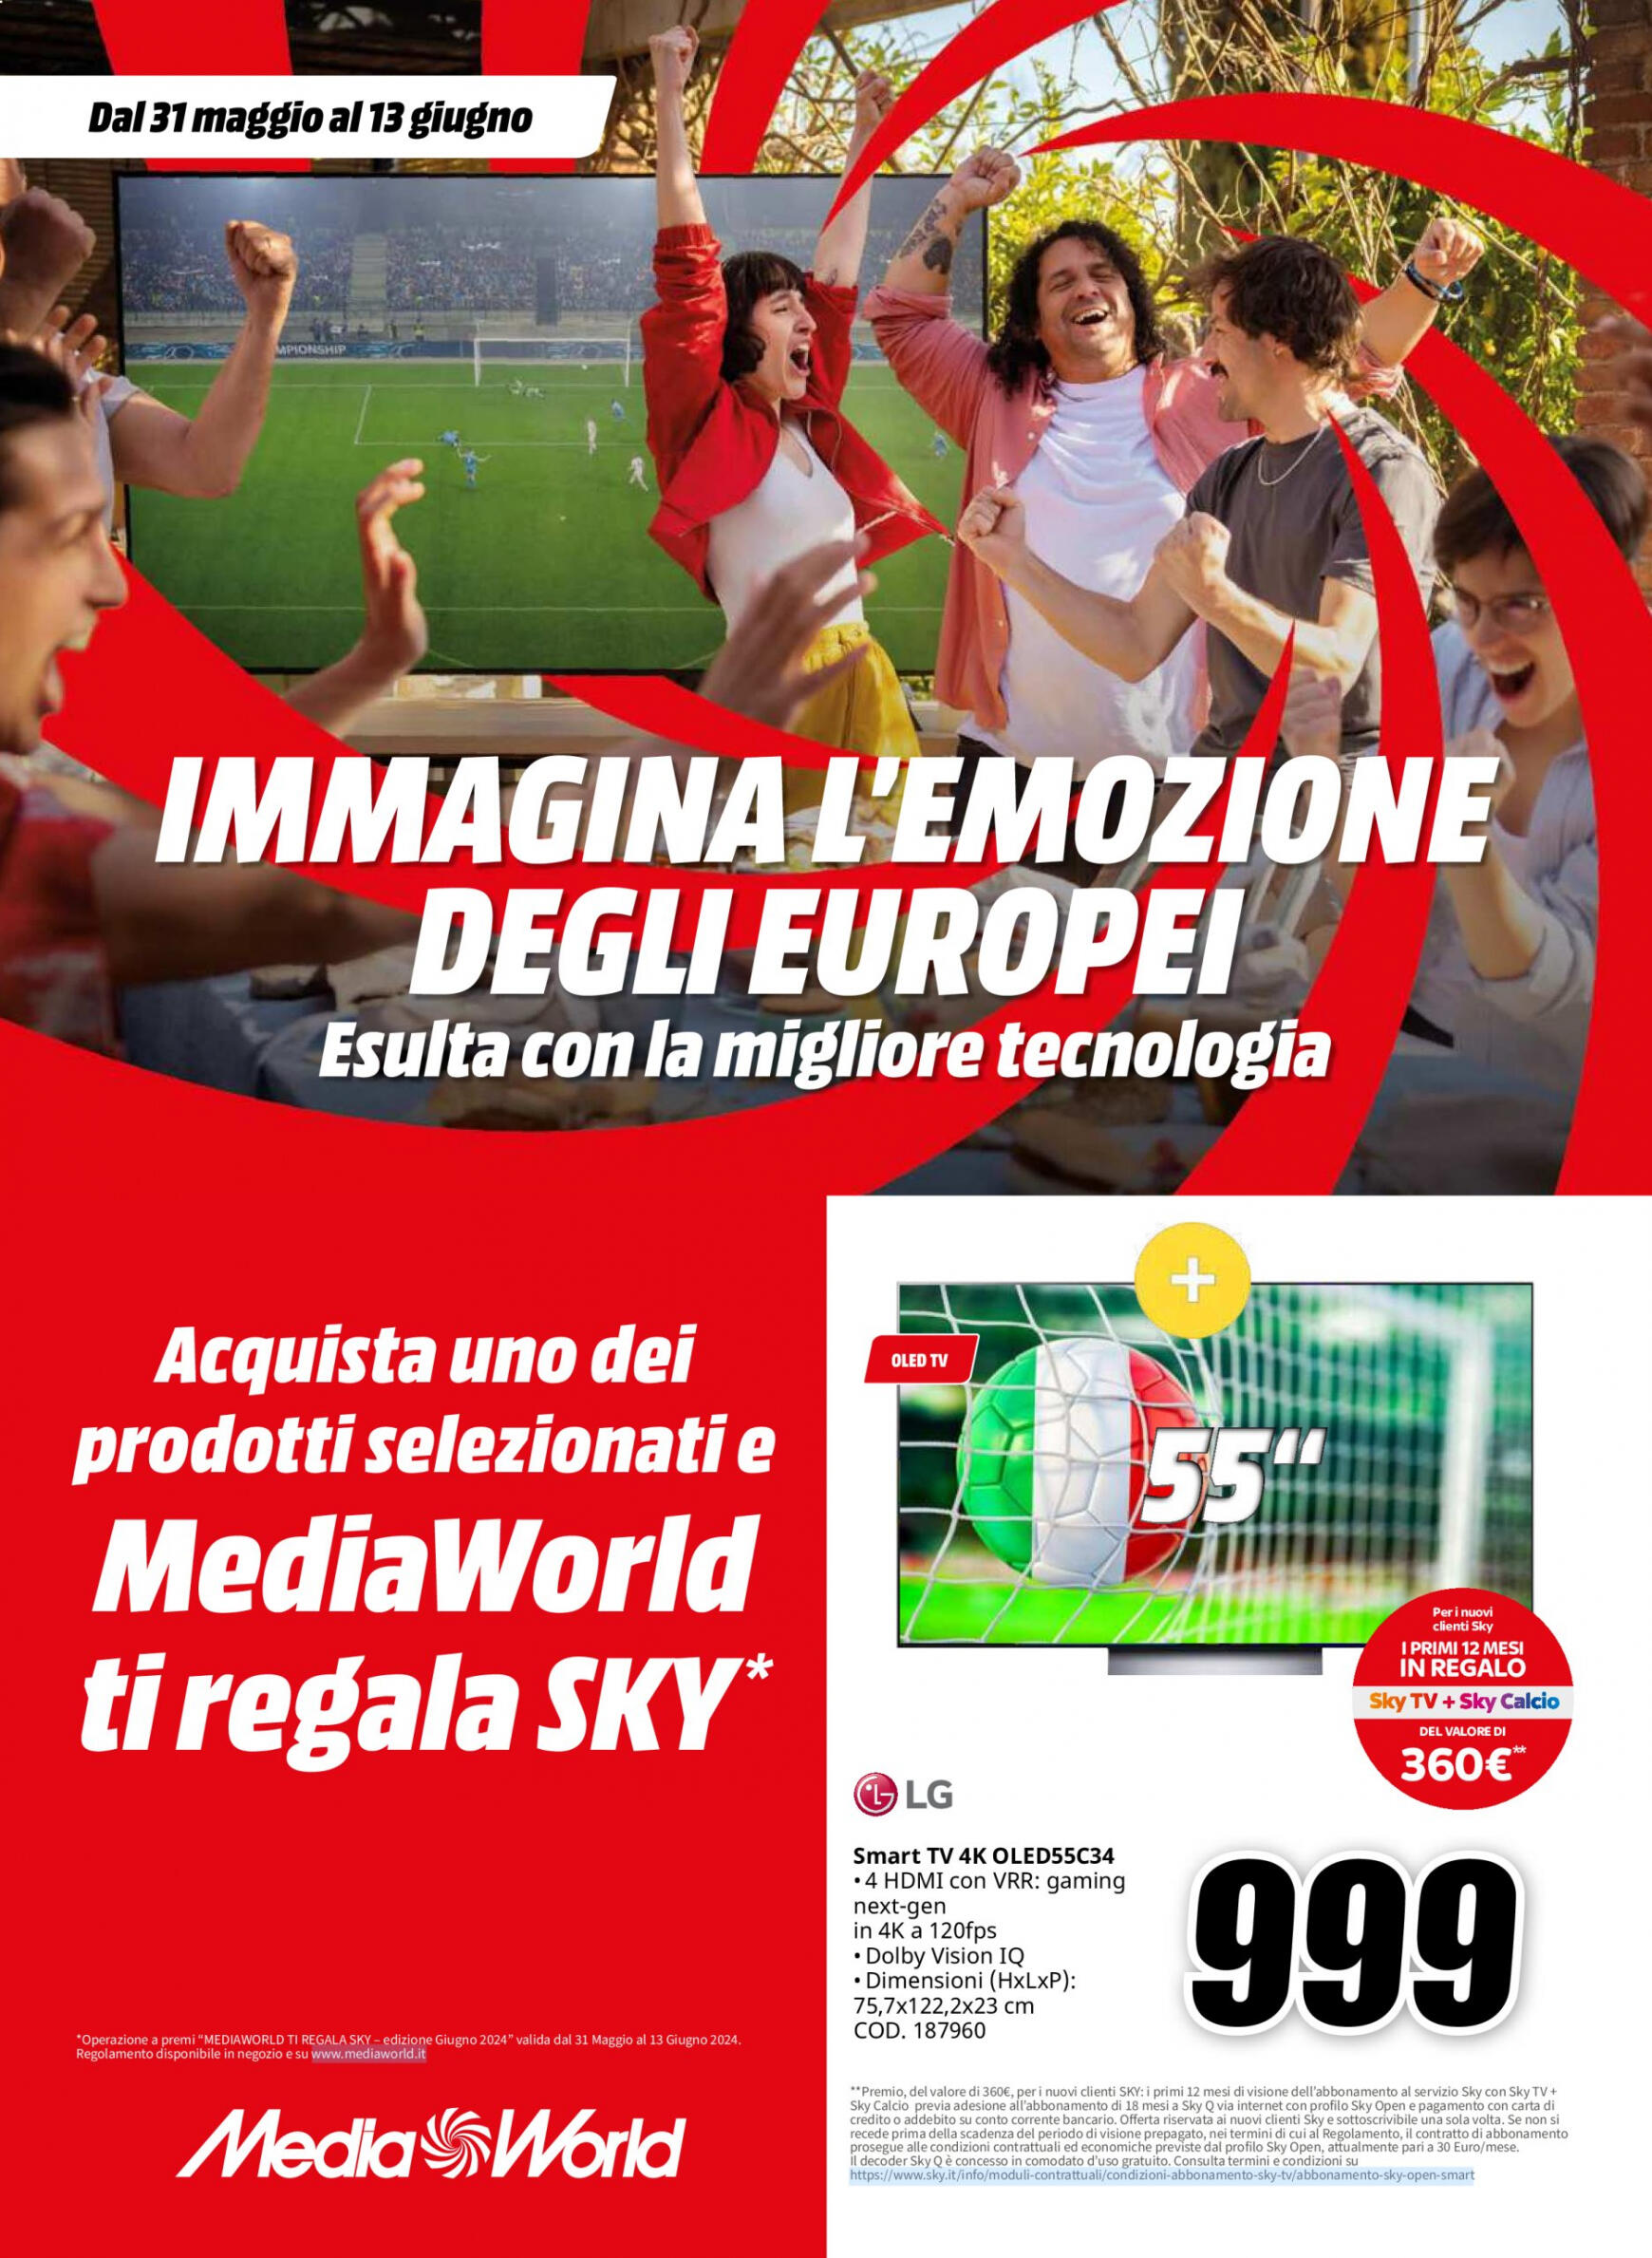 mediaworld - Nuovo volantino Mediaworld 31.05. - 13.06. - page: 1